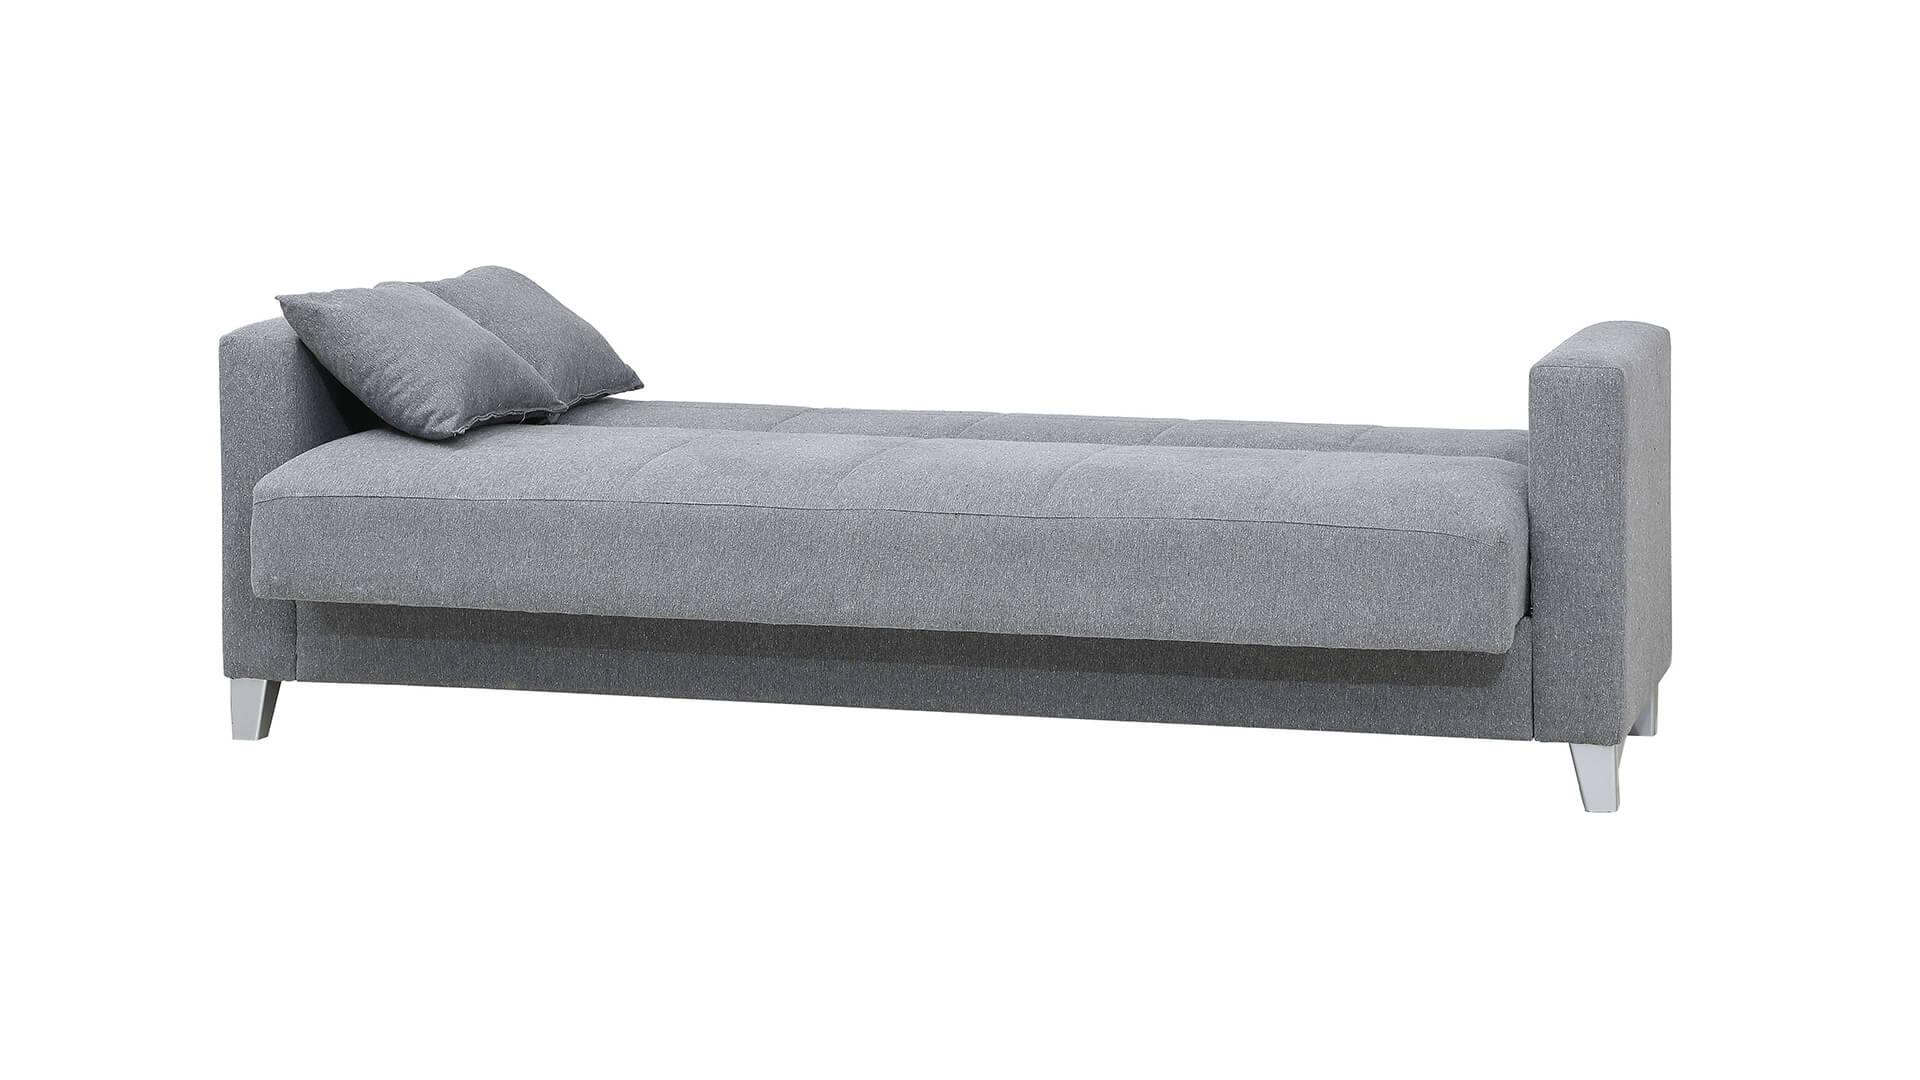 LUGANO | Sofa Beds